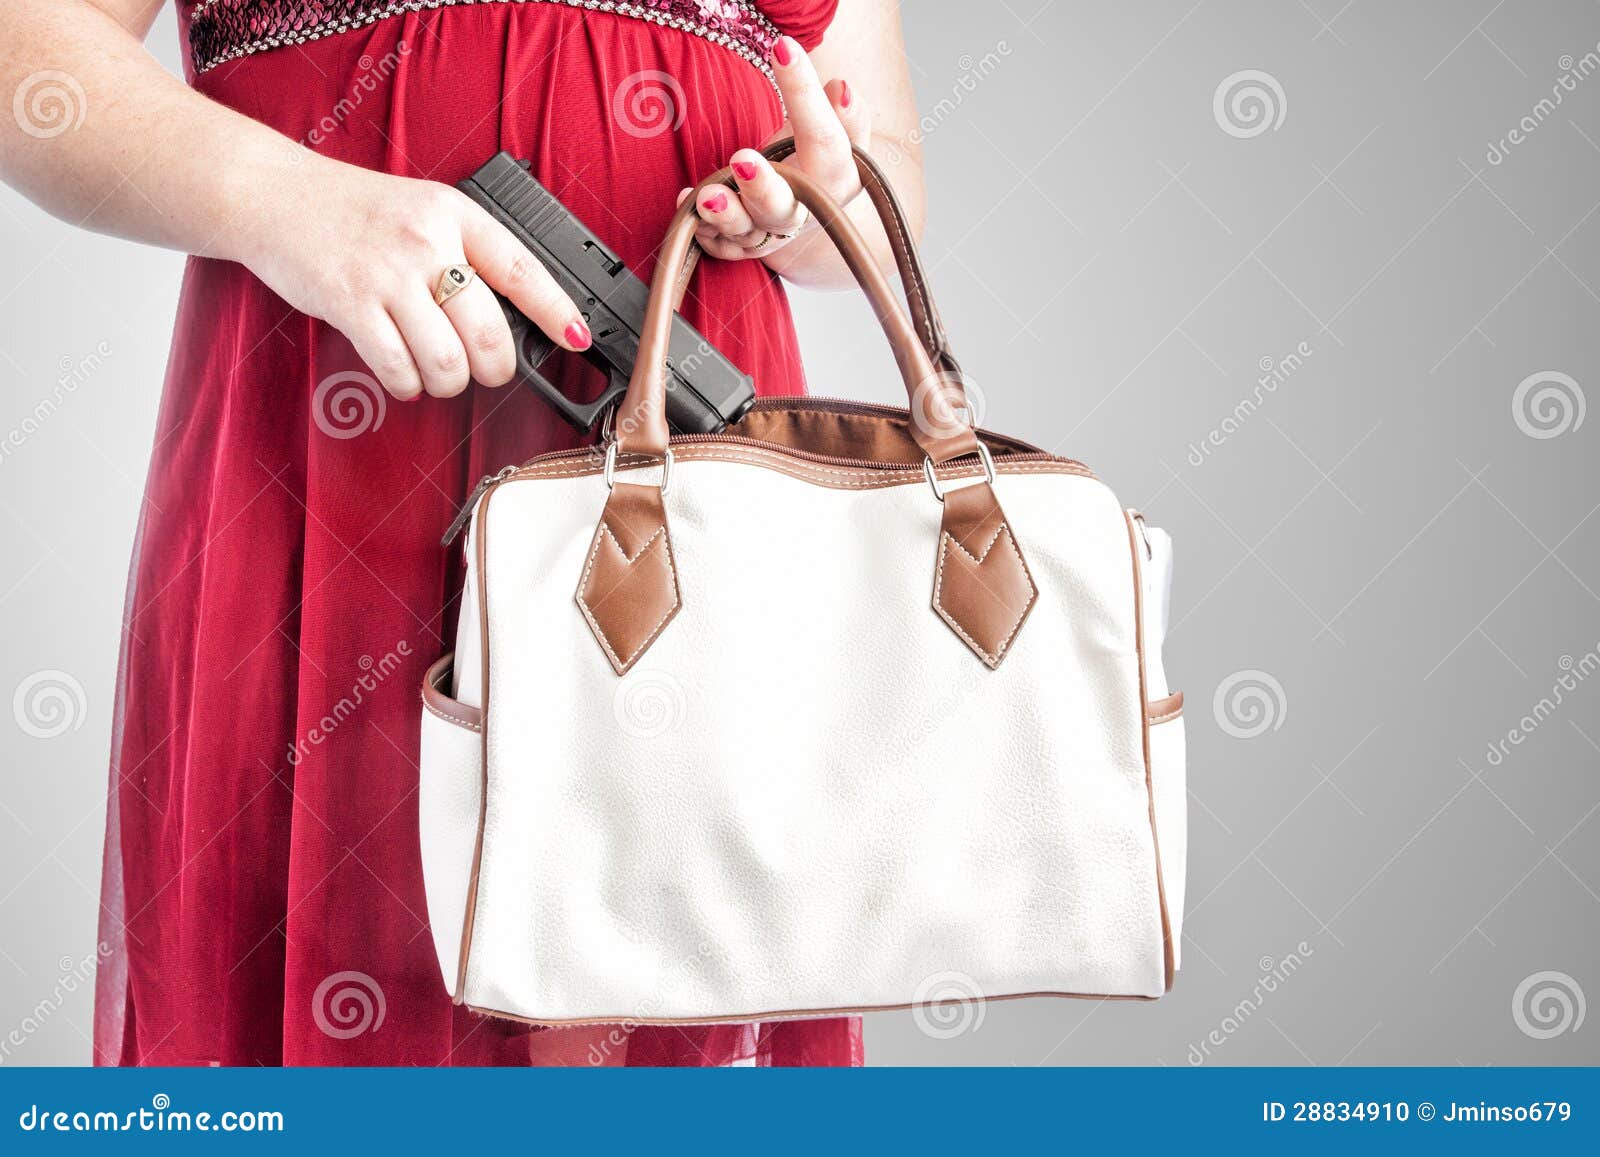 woman taking gun from purse